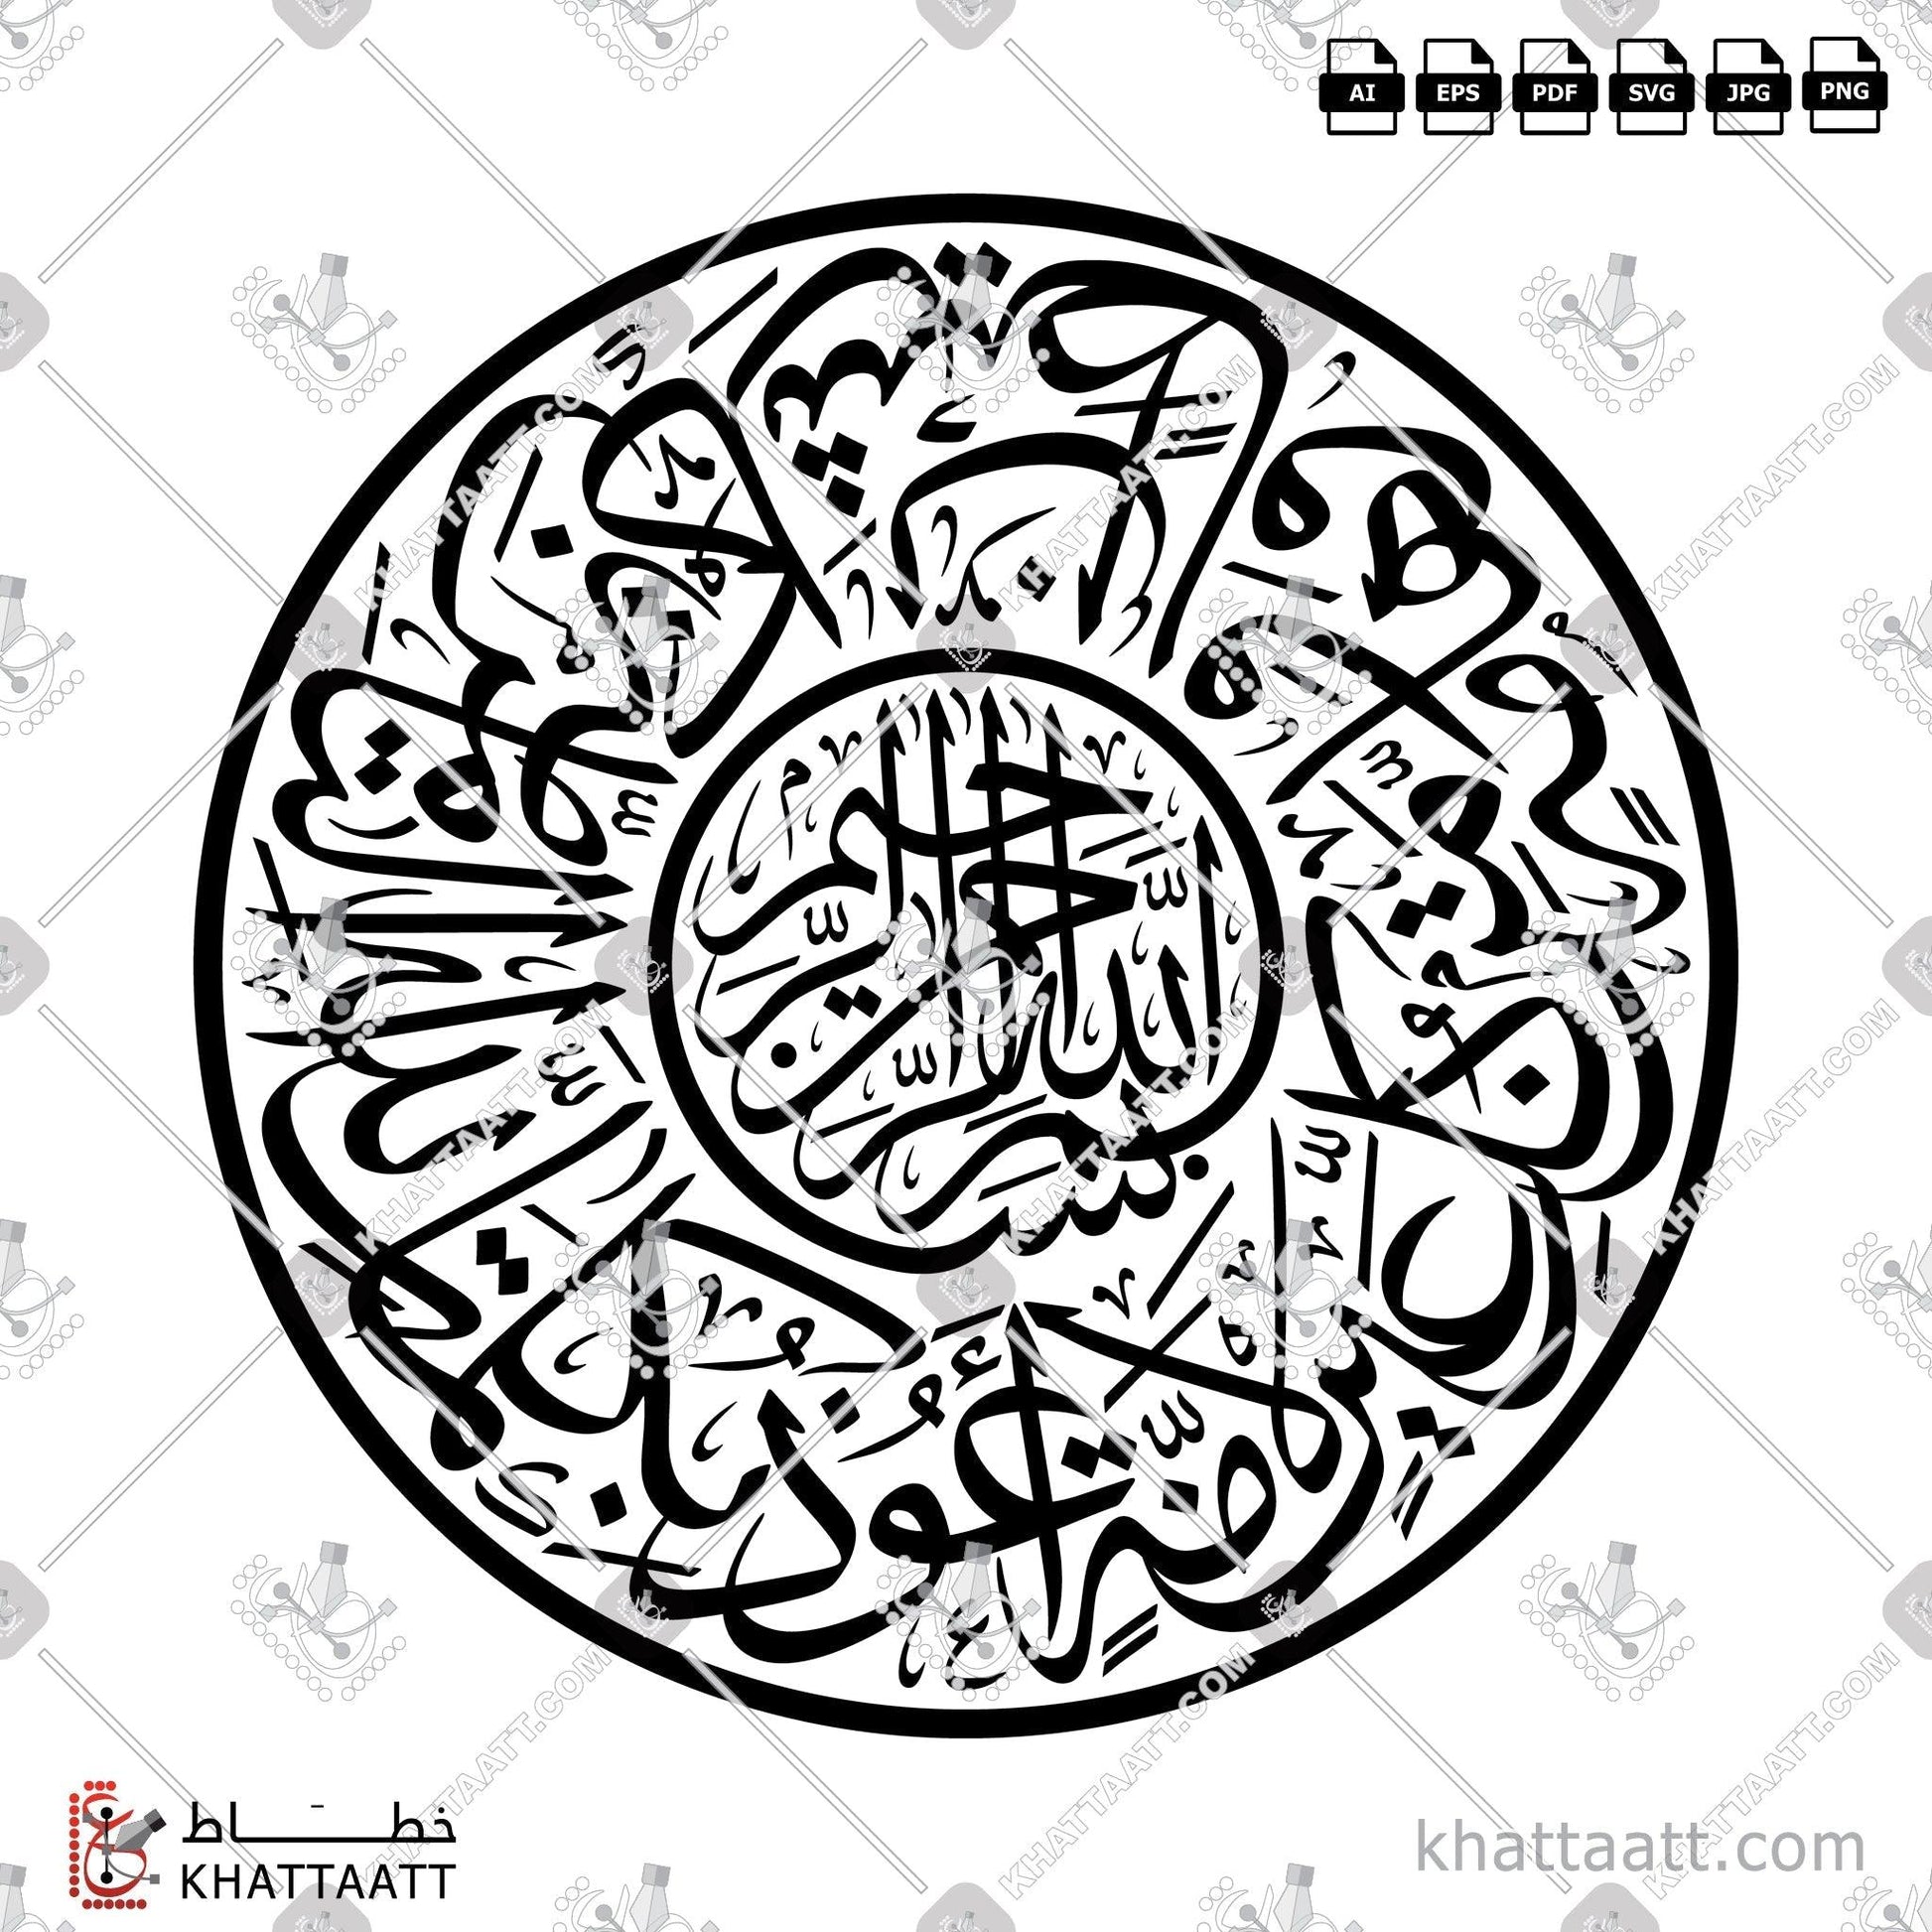 Download Arabic Calligraphy of أعوذ بكلمات الله التامة من كل شيطان وهامة ومن كل عين لامة in Thuluth - خط الثلث in vector and .png